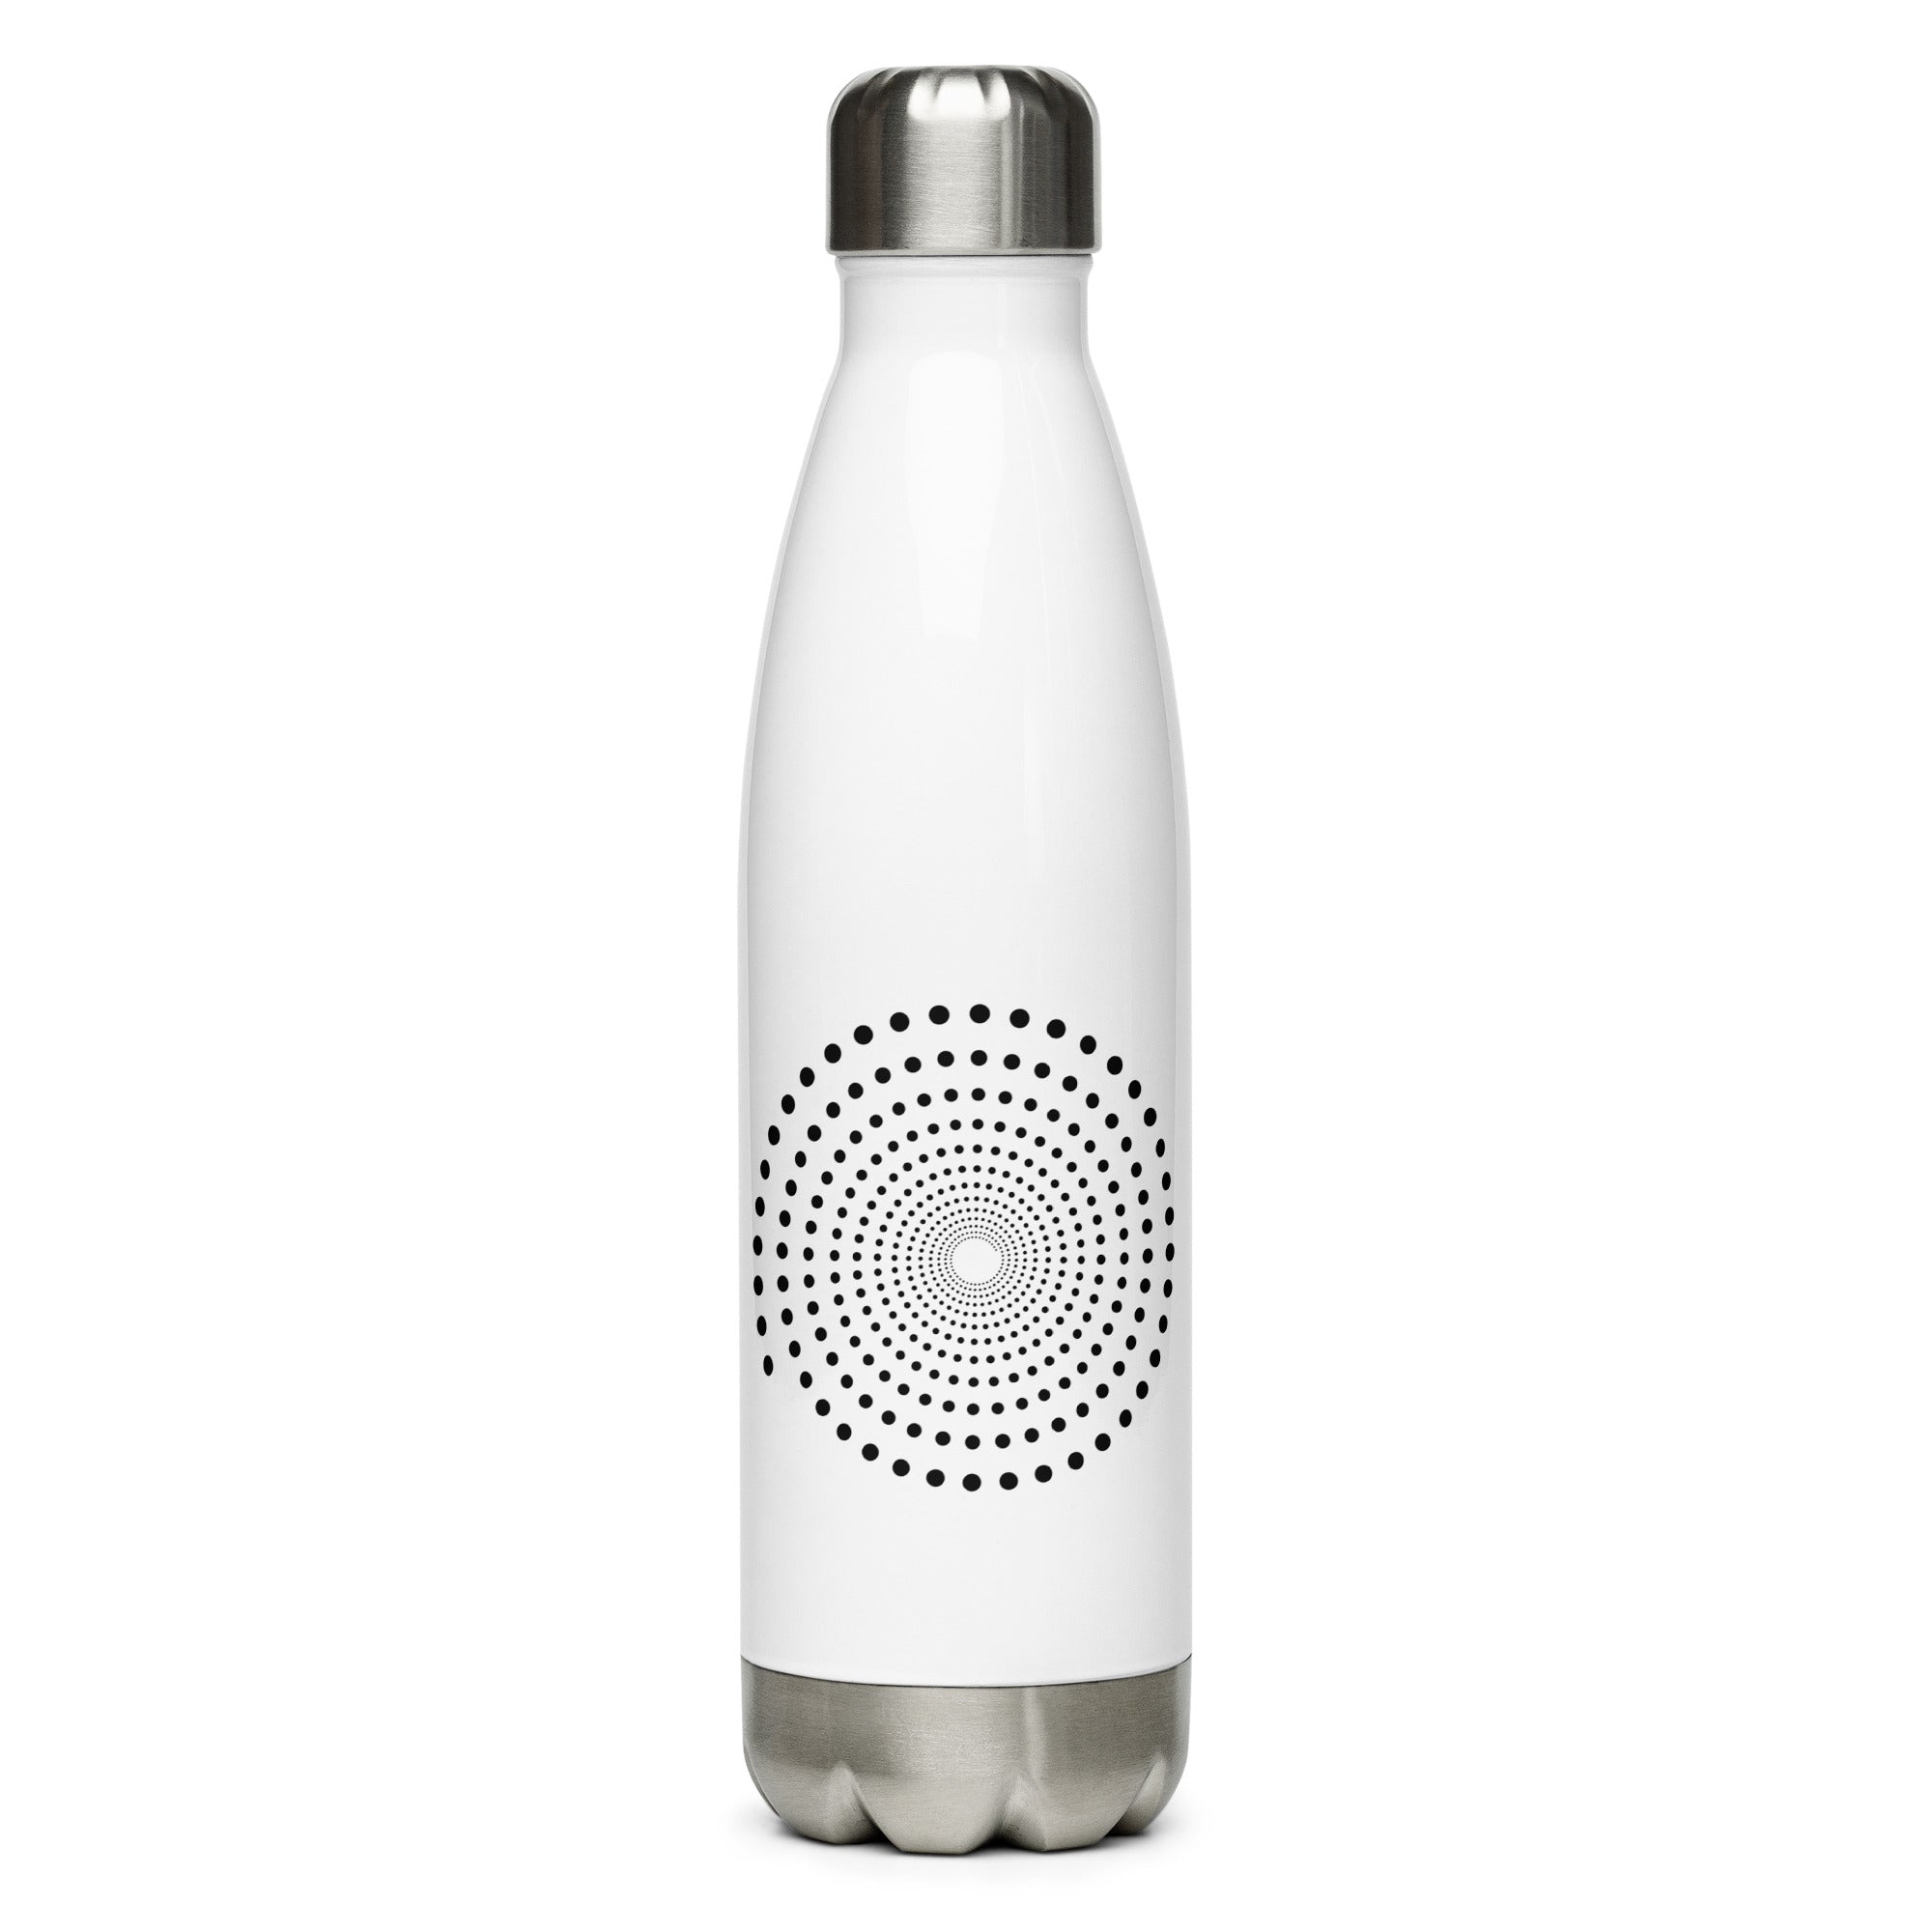 Fila Water Bottle Stainless Steel Core Fitness White Easy-Sip